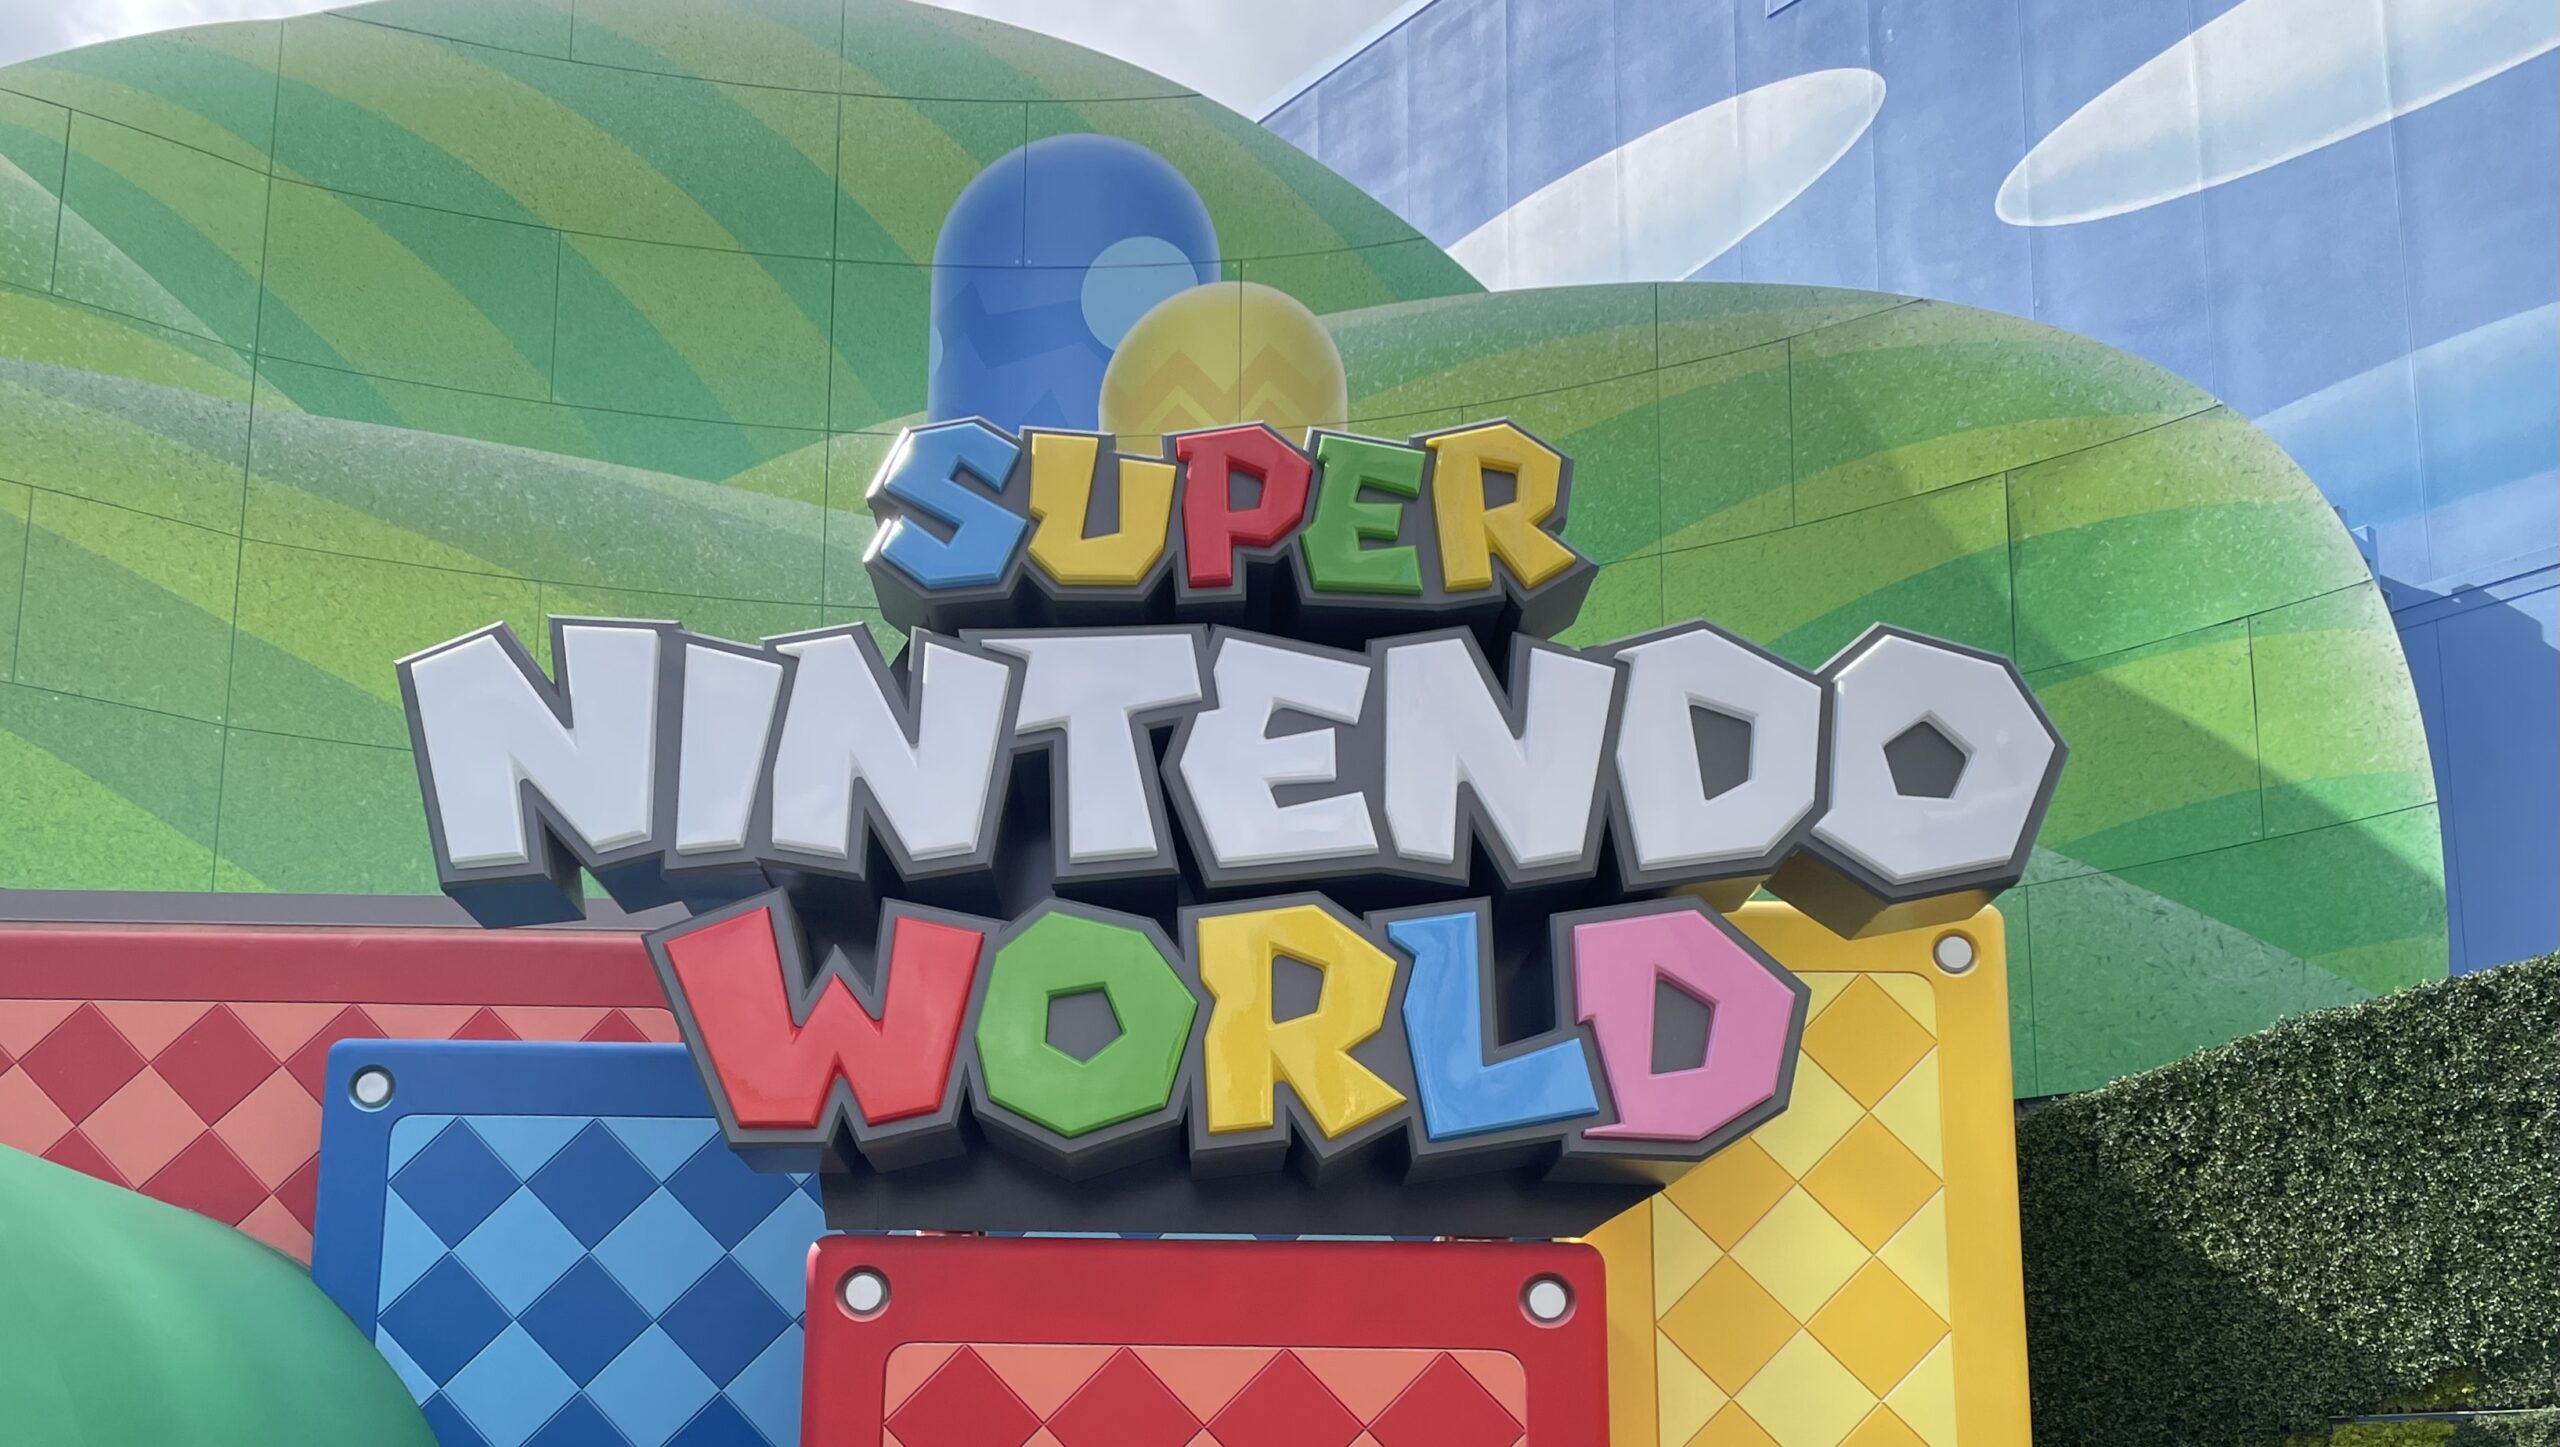 The Finals - Feature - Nintendo World Report